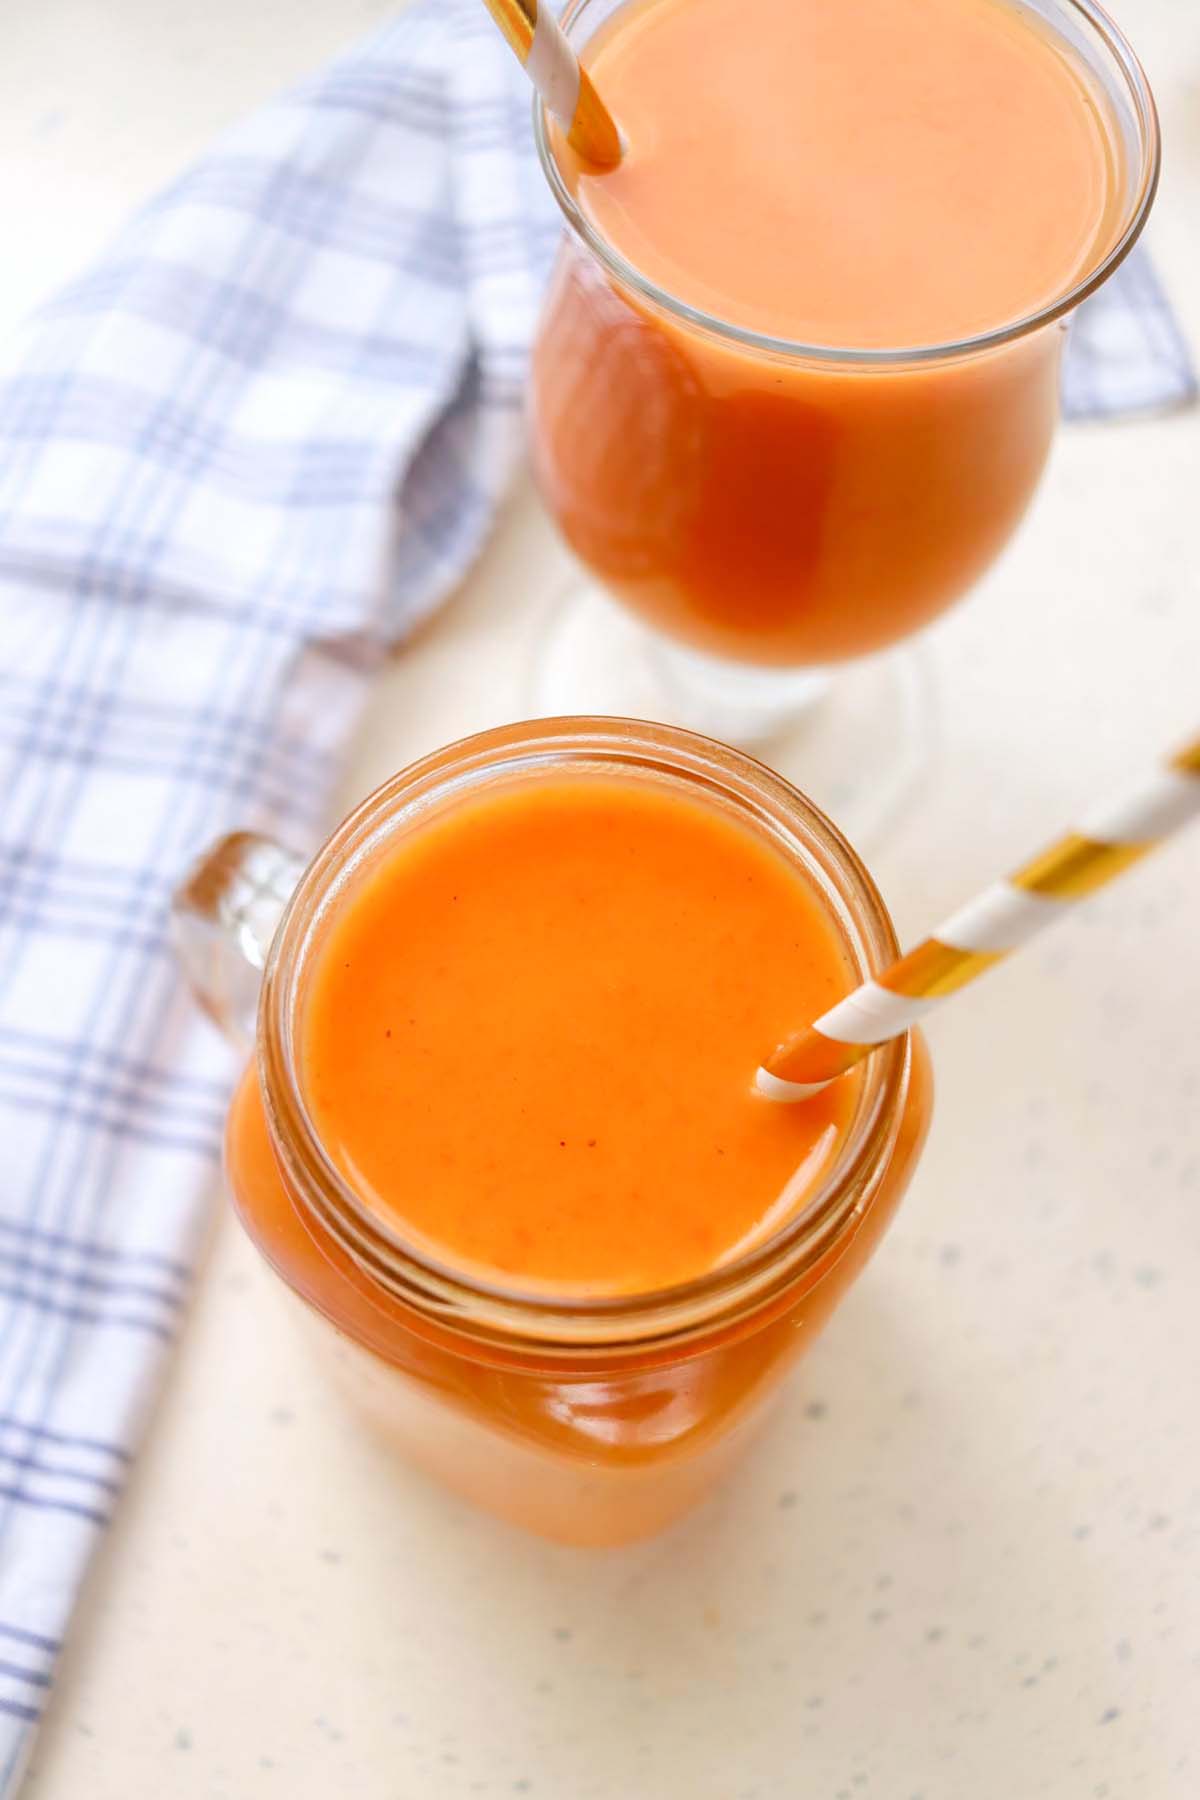 Pumpkin smoothie in a glass jar with a straw.